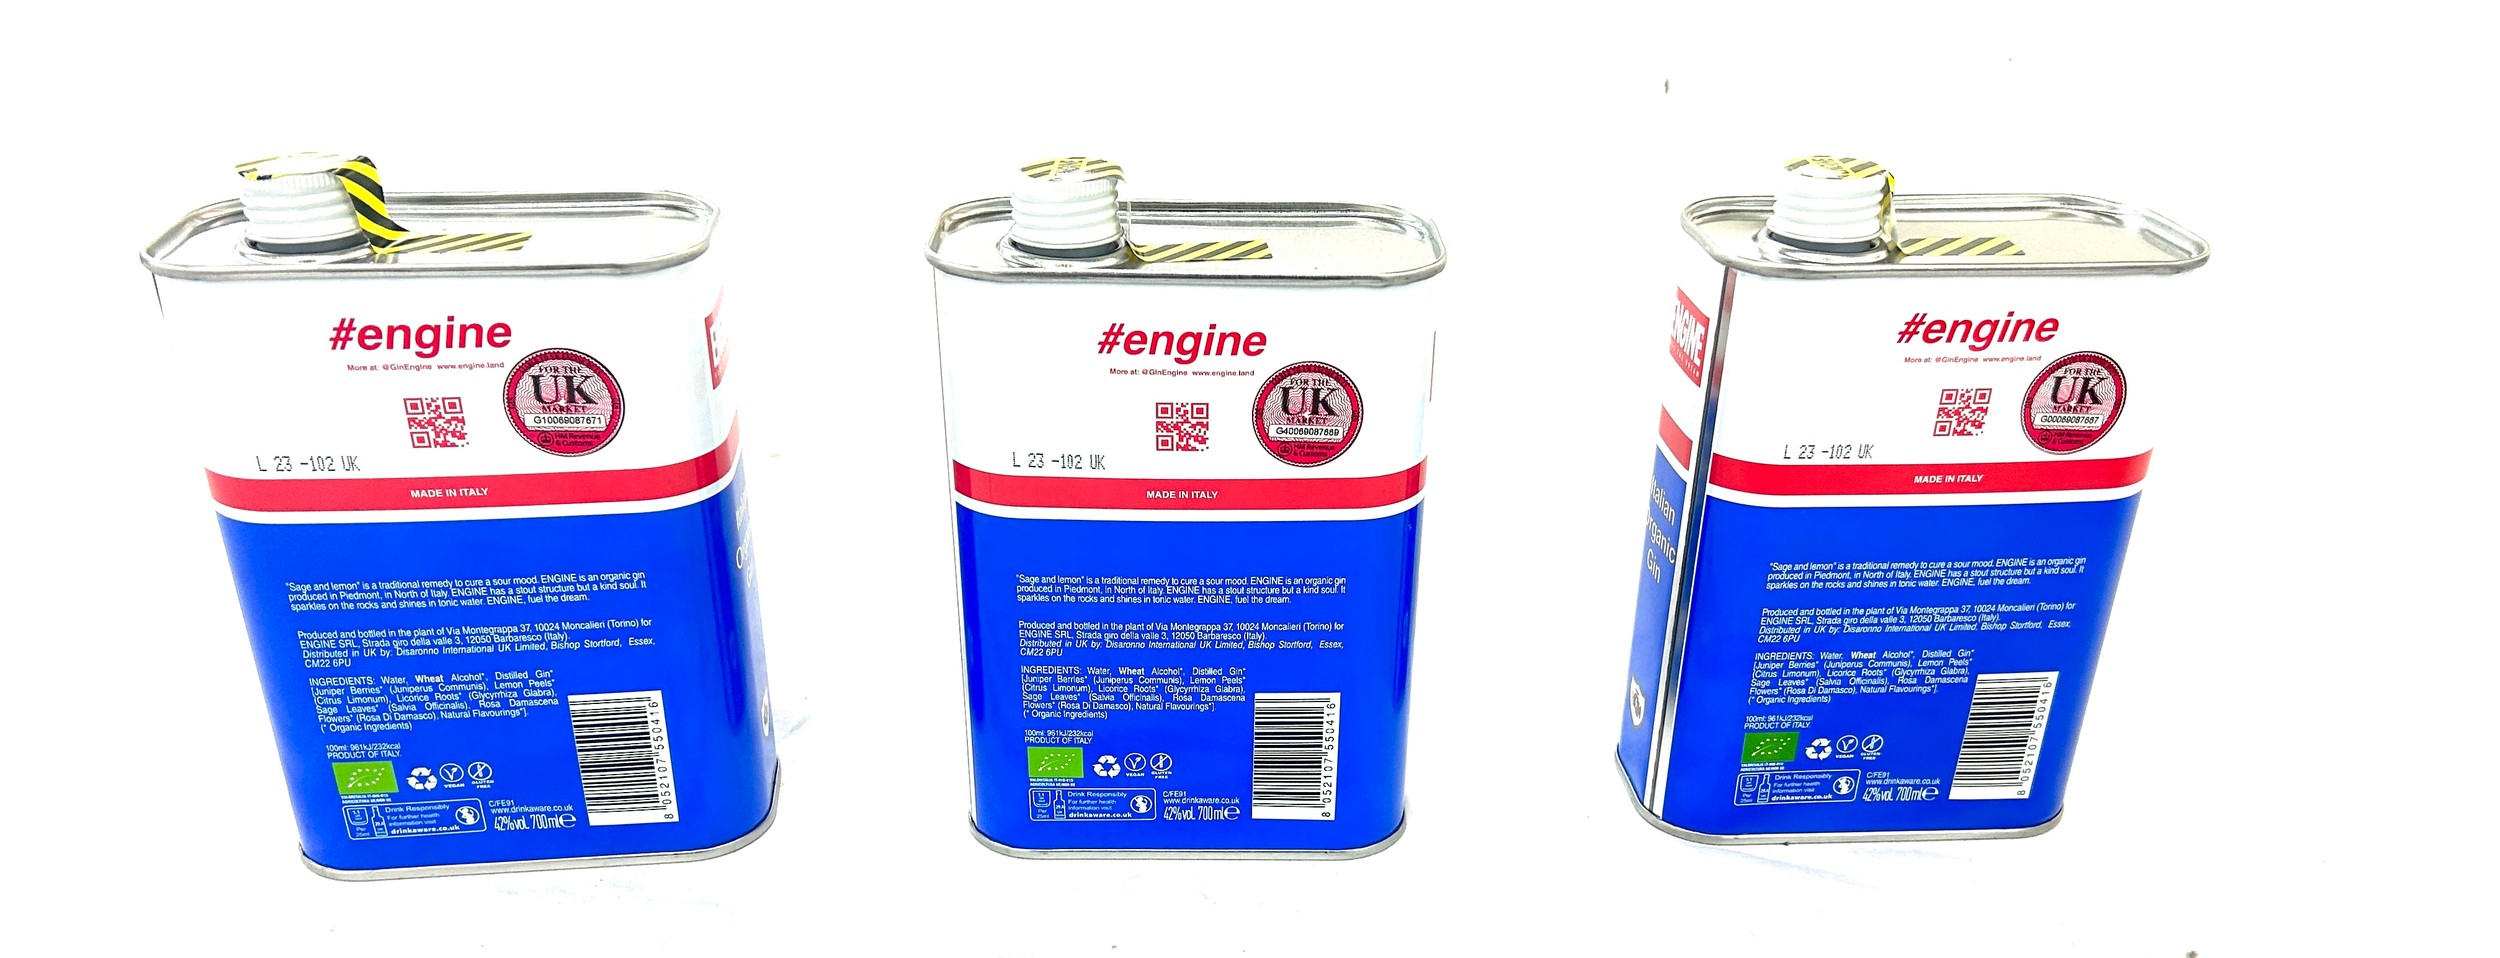 3 Bottles of Engine fuel the dream italian organic Gin 700ml 42% - Image 4 of 4